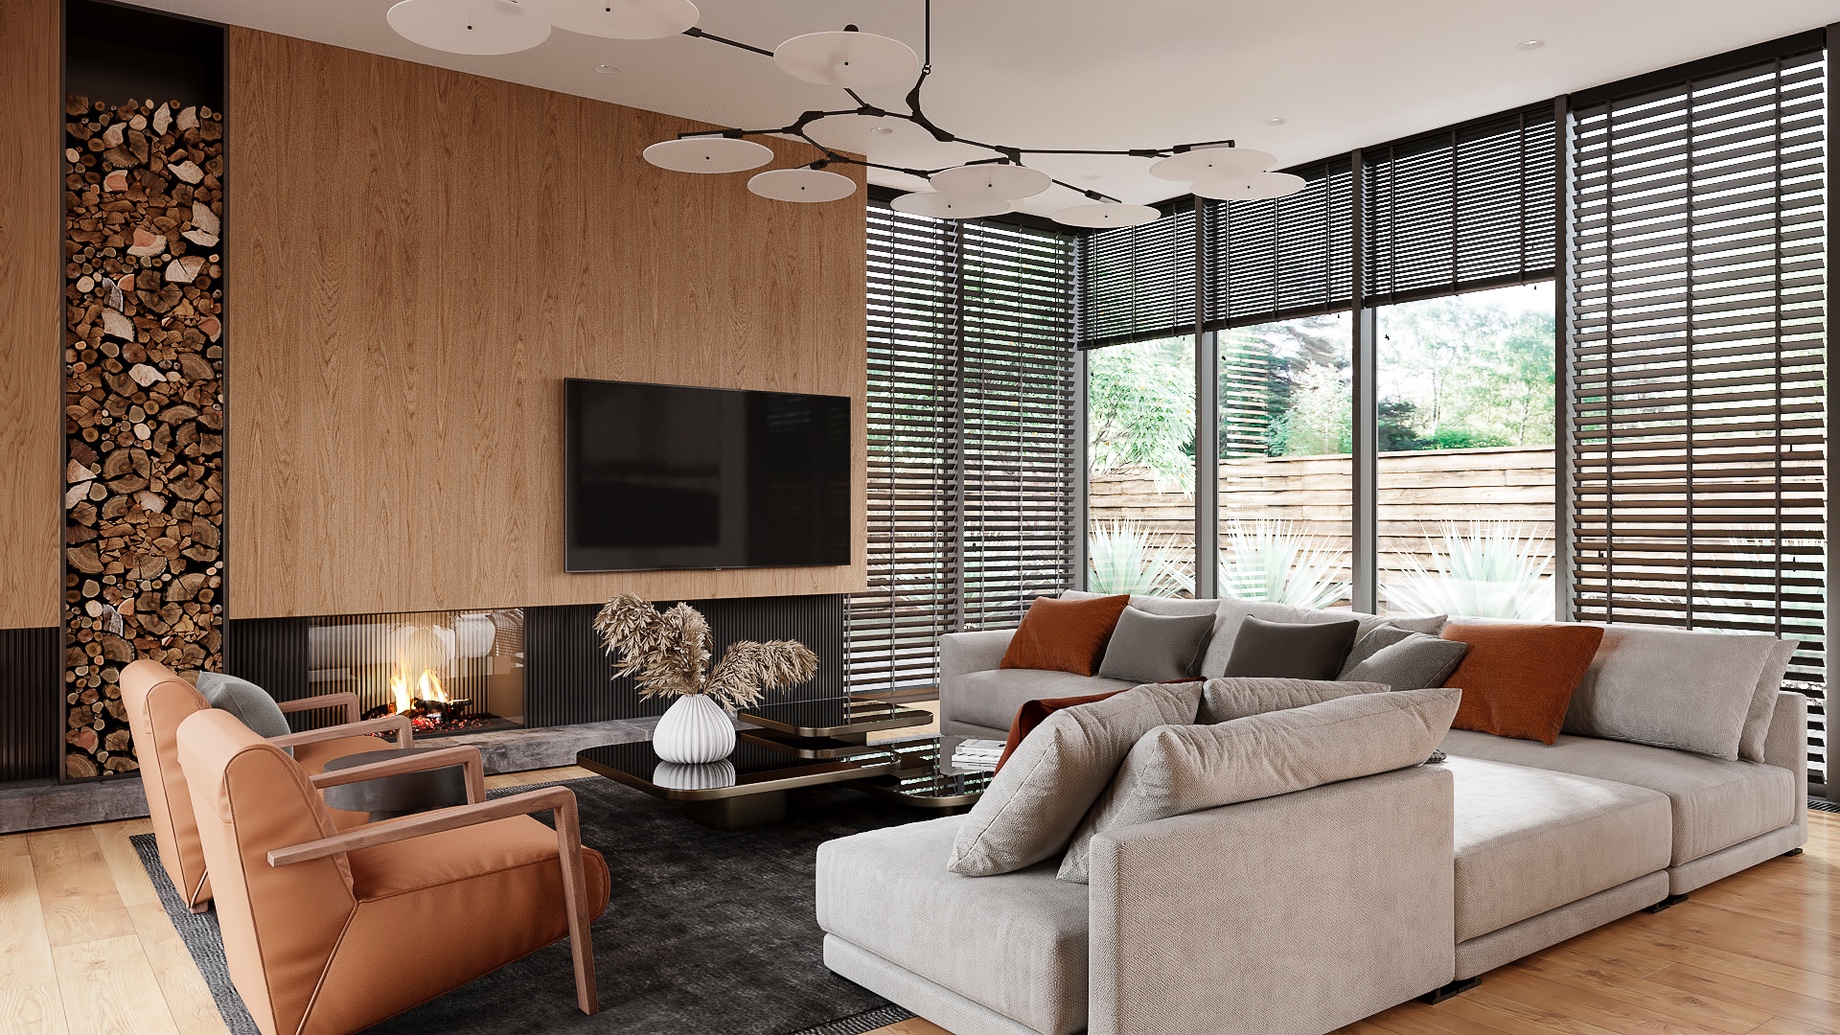 Warm Earth Tones - Top 6 Interior Design Trends for Luxury Living in California